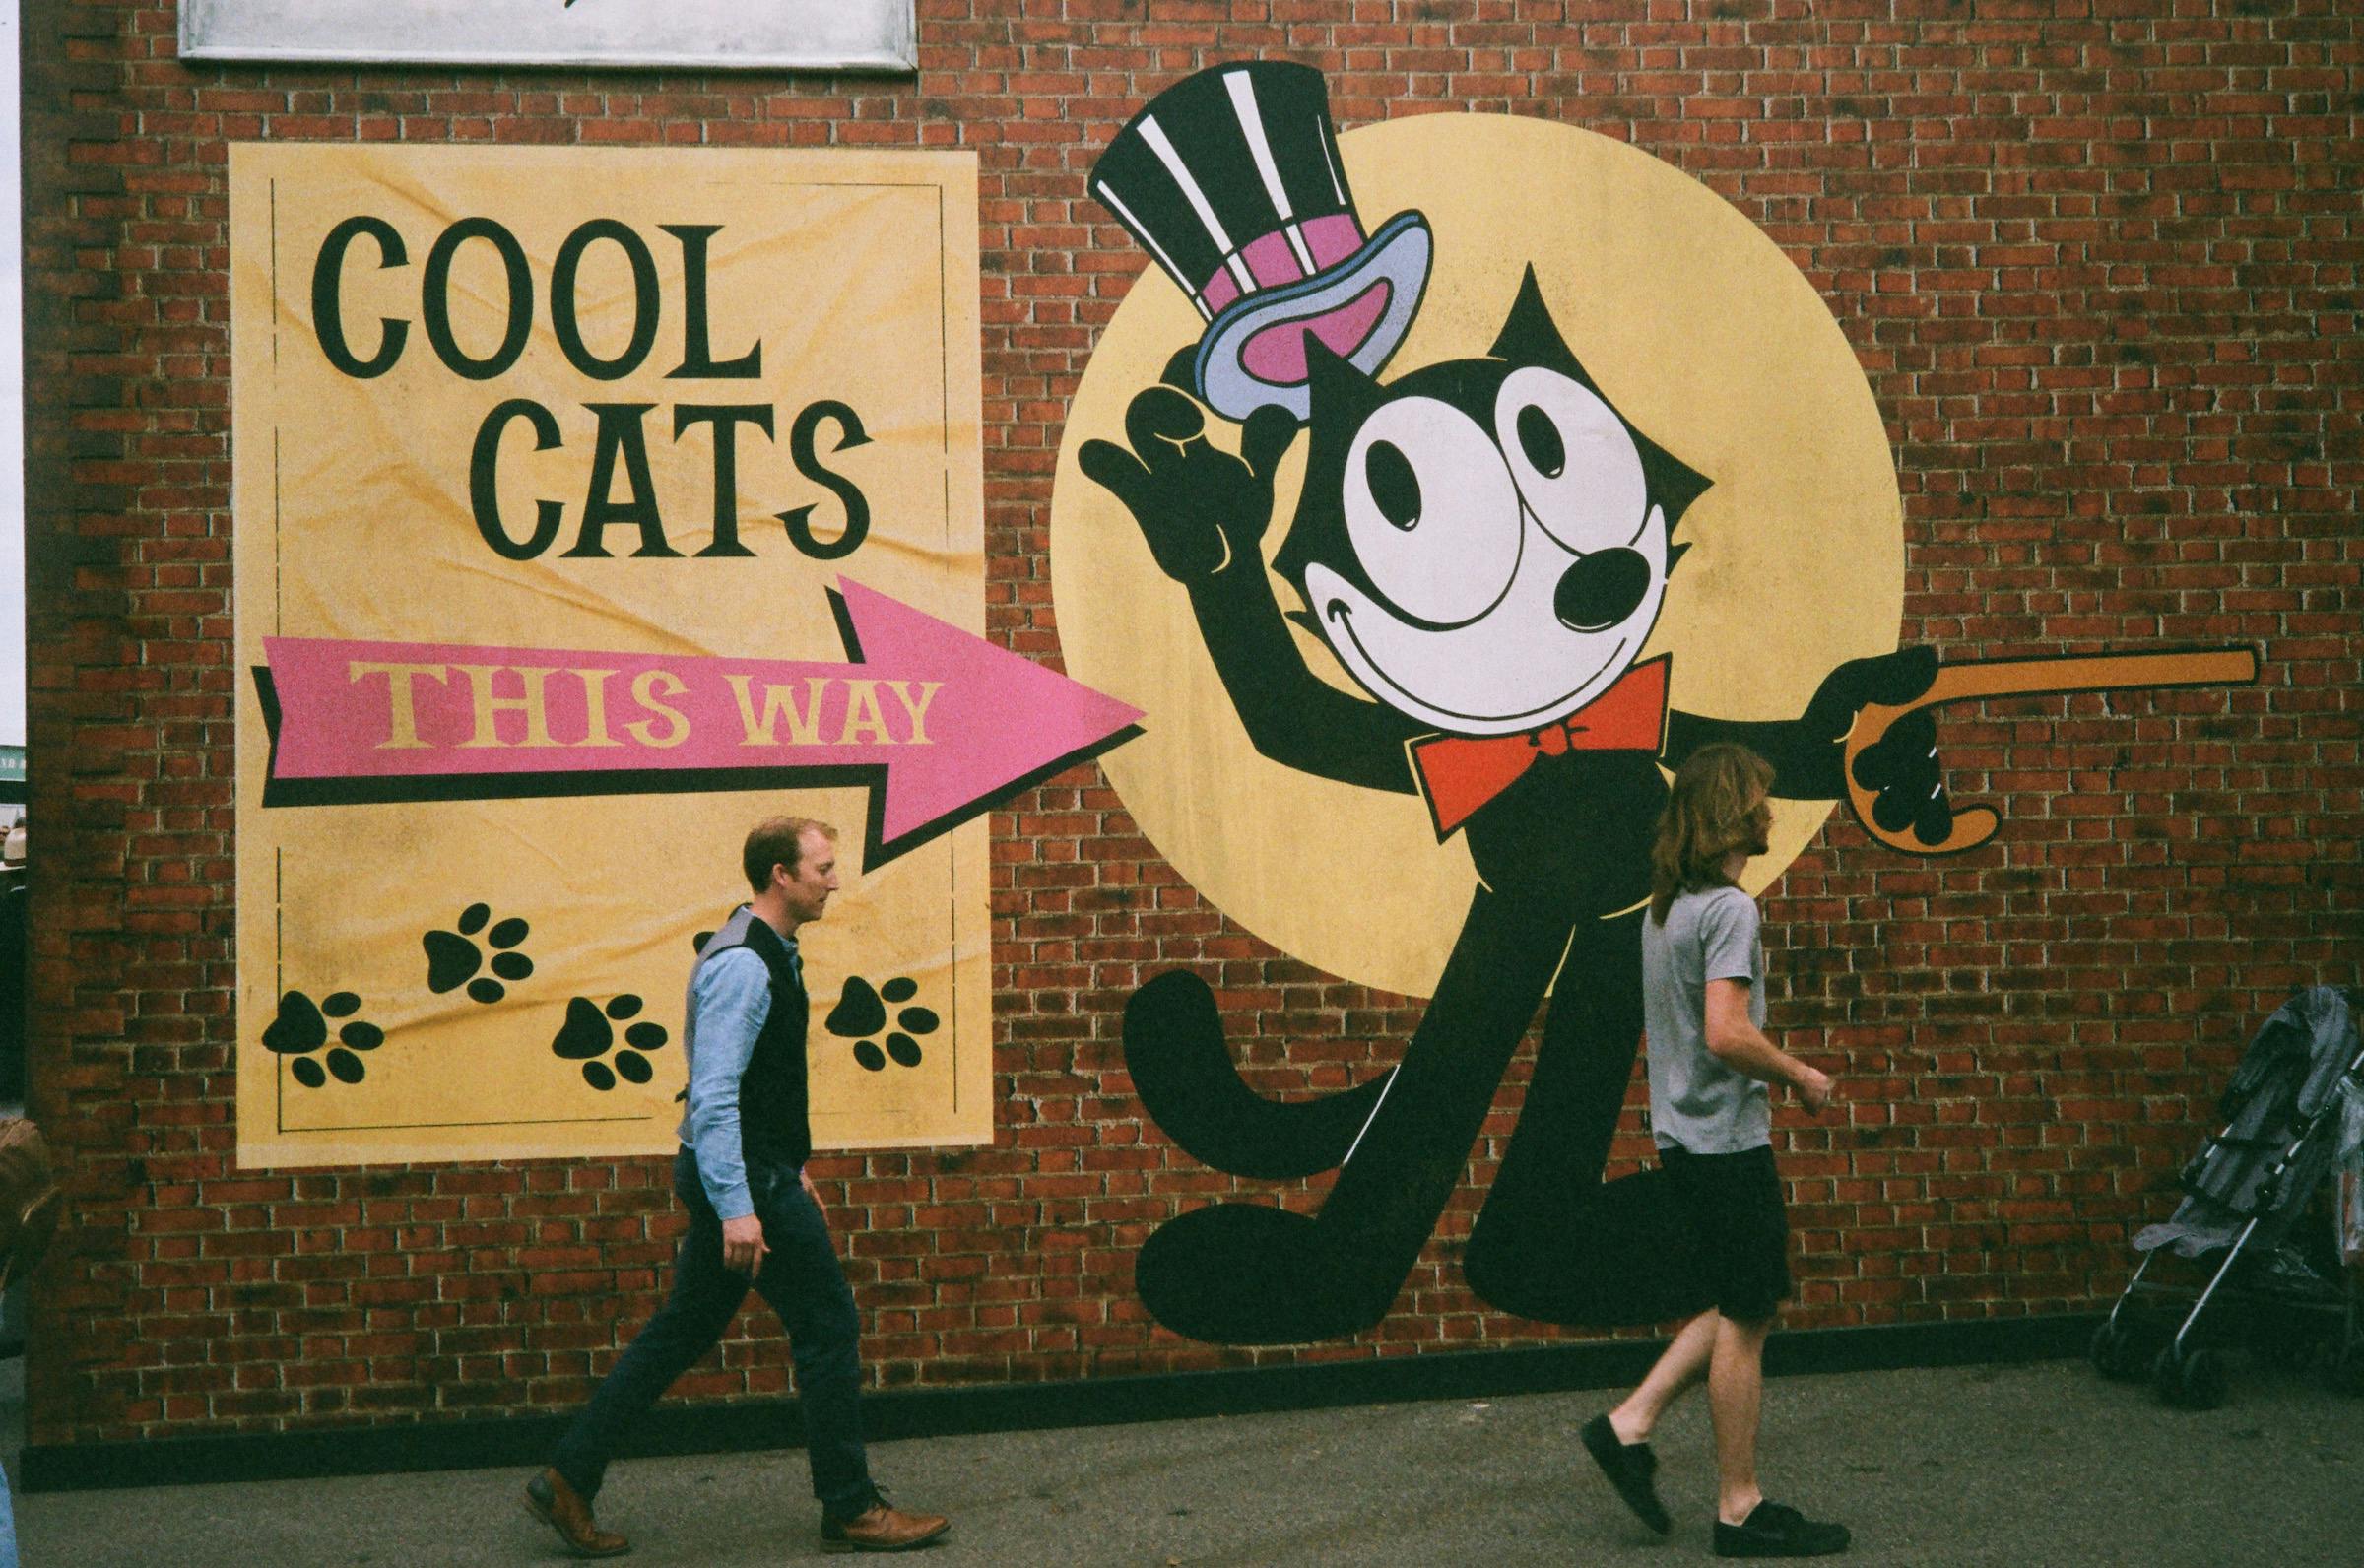 Goodwood Revival film cool cats event